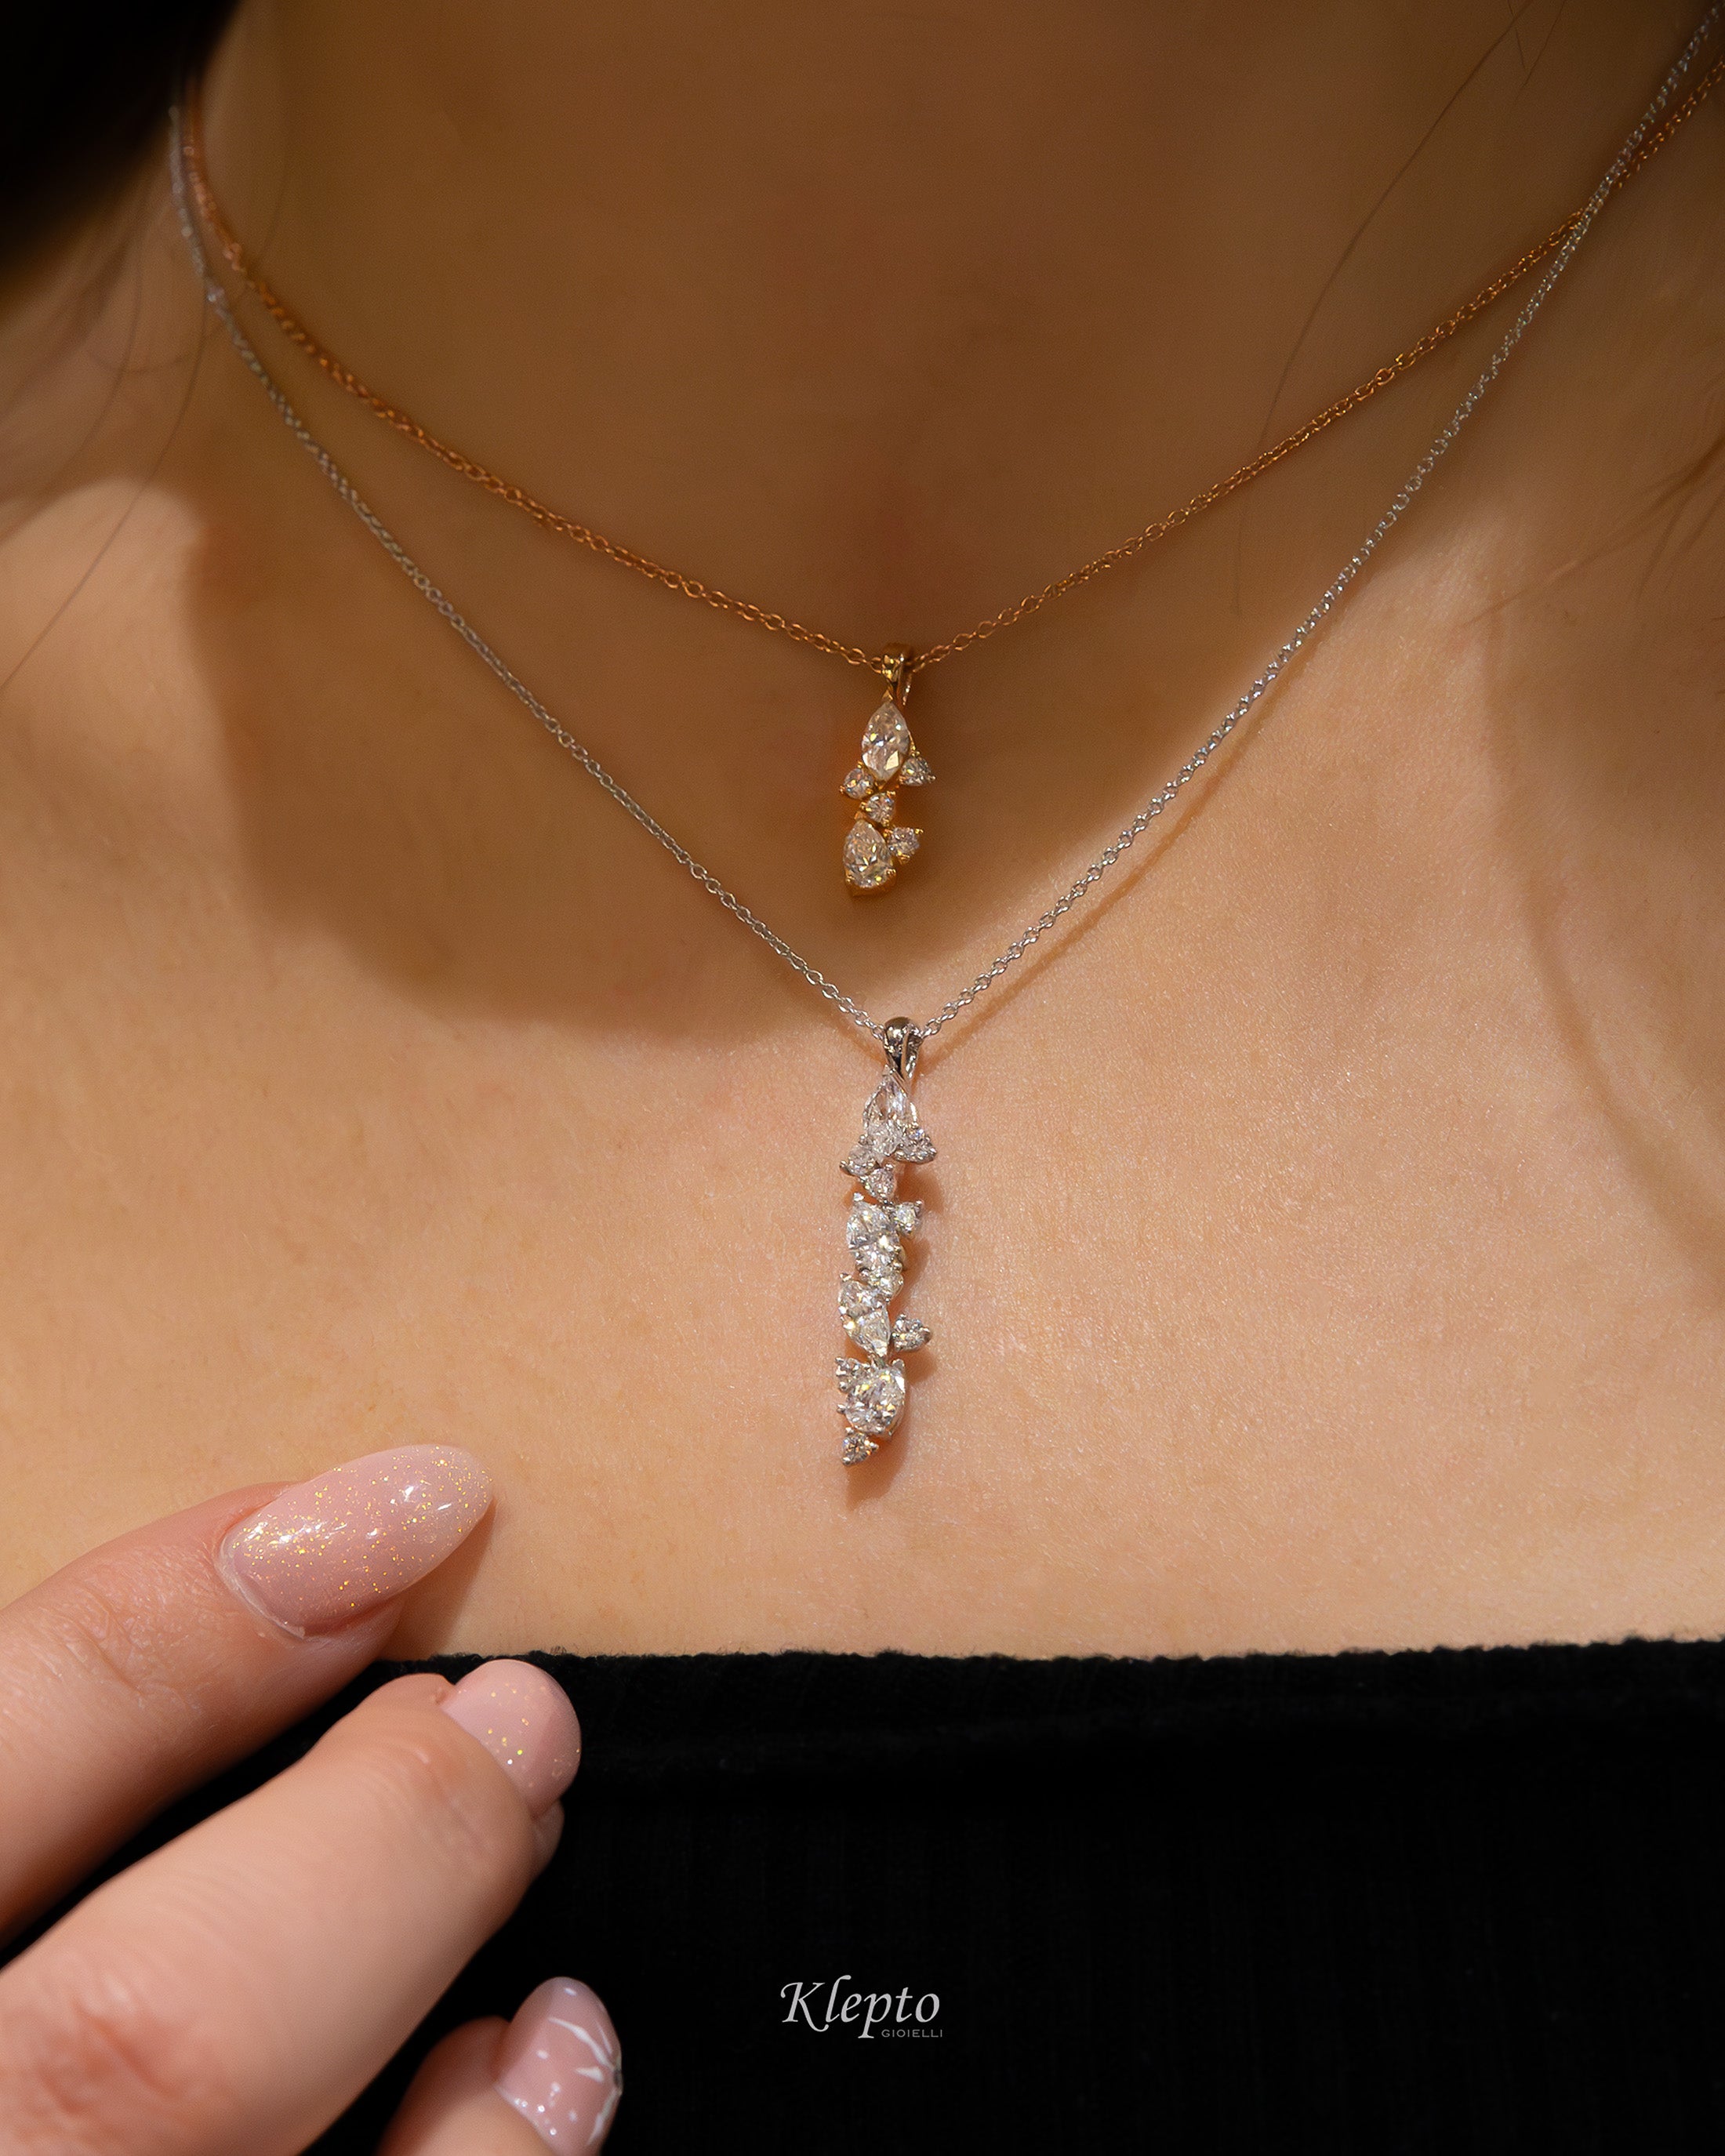 Rose gold pendant with diamonds